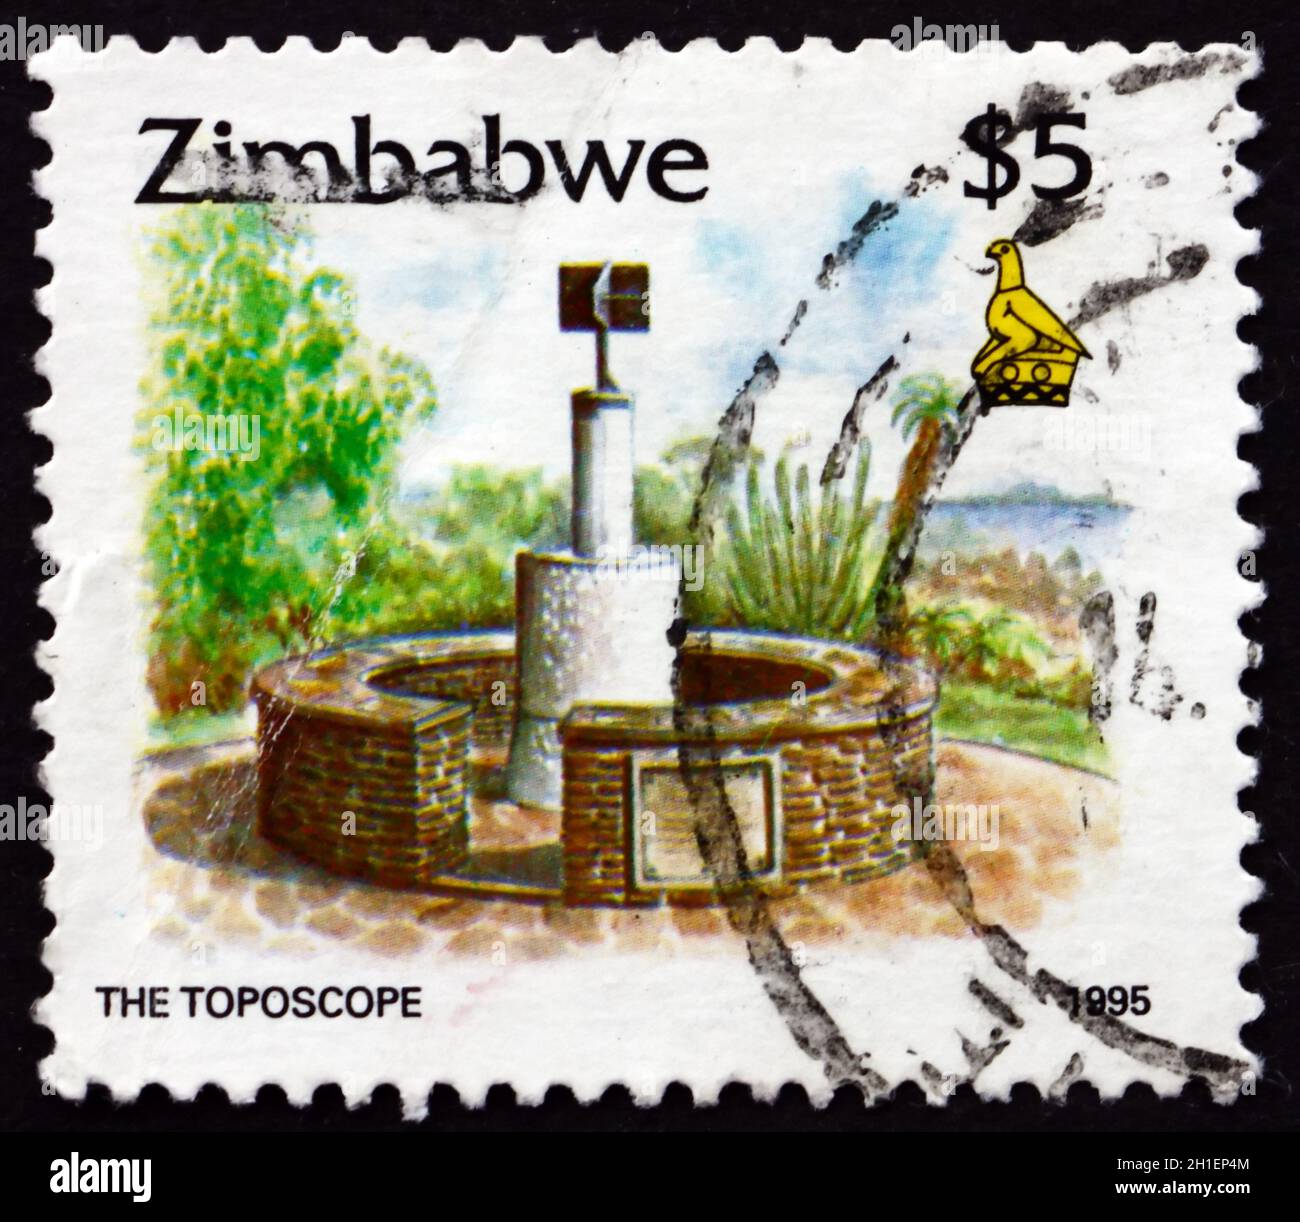 ZIMBABWE - CIRCA 1995: a stamp printed in Zimbabwe shows the Toposcope, circa 1995 Stock Photo